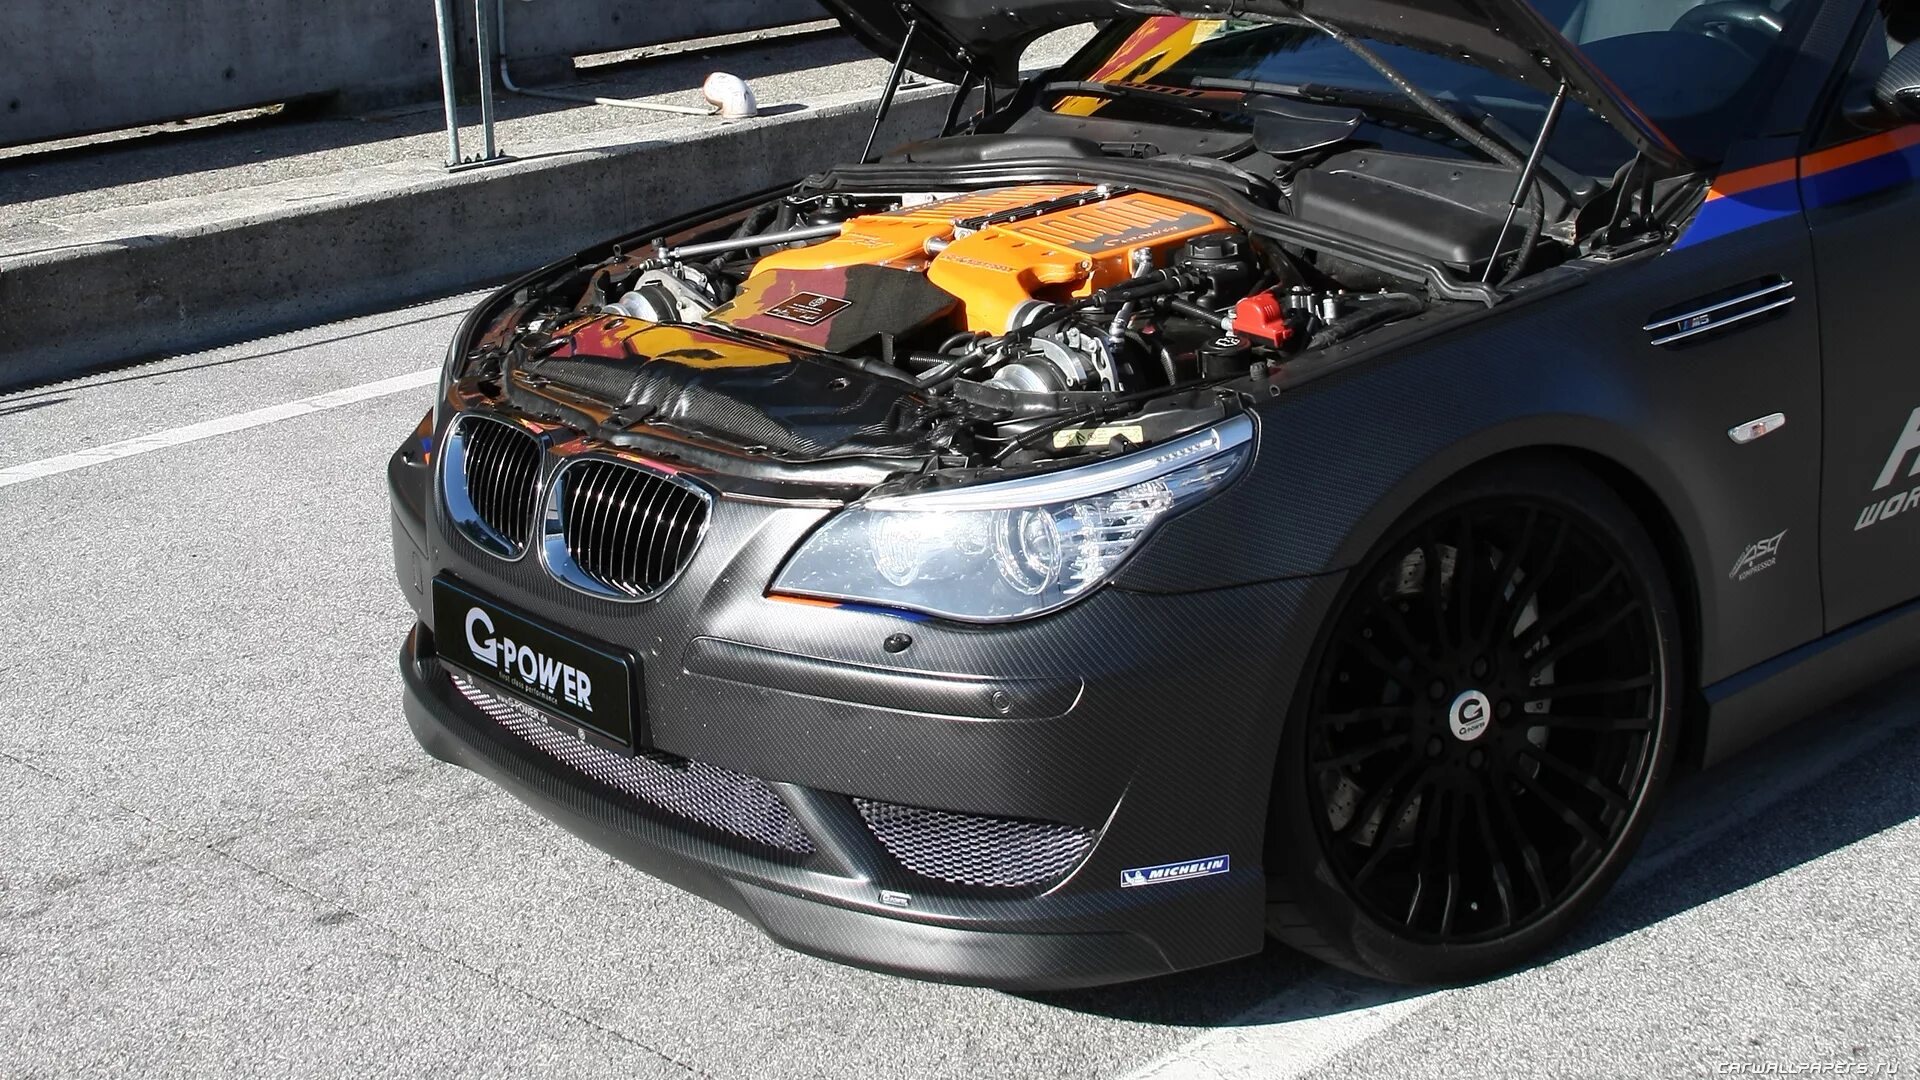 G v 10. -Power BMW m5 Hurricane RR. BMW e60 g Power. BMW m5 Hurricane RR. BMW m5 g Power Hurricane RRS.